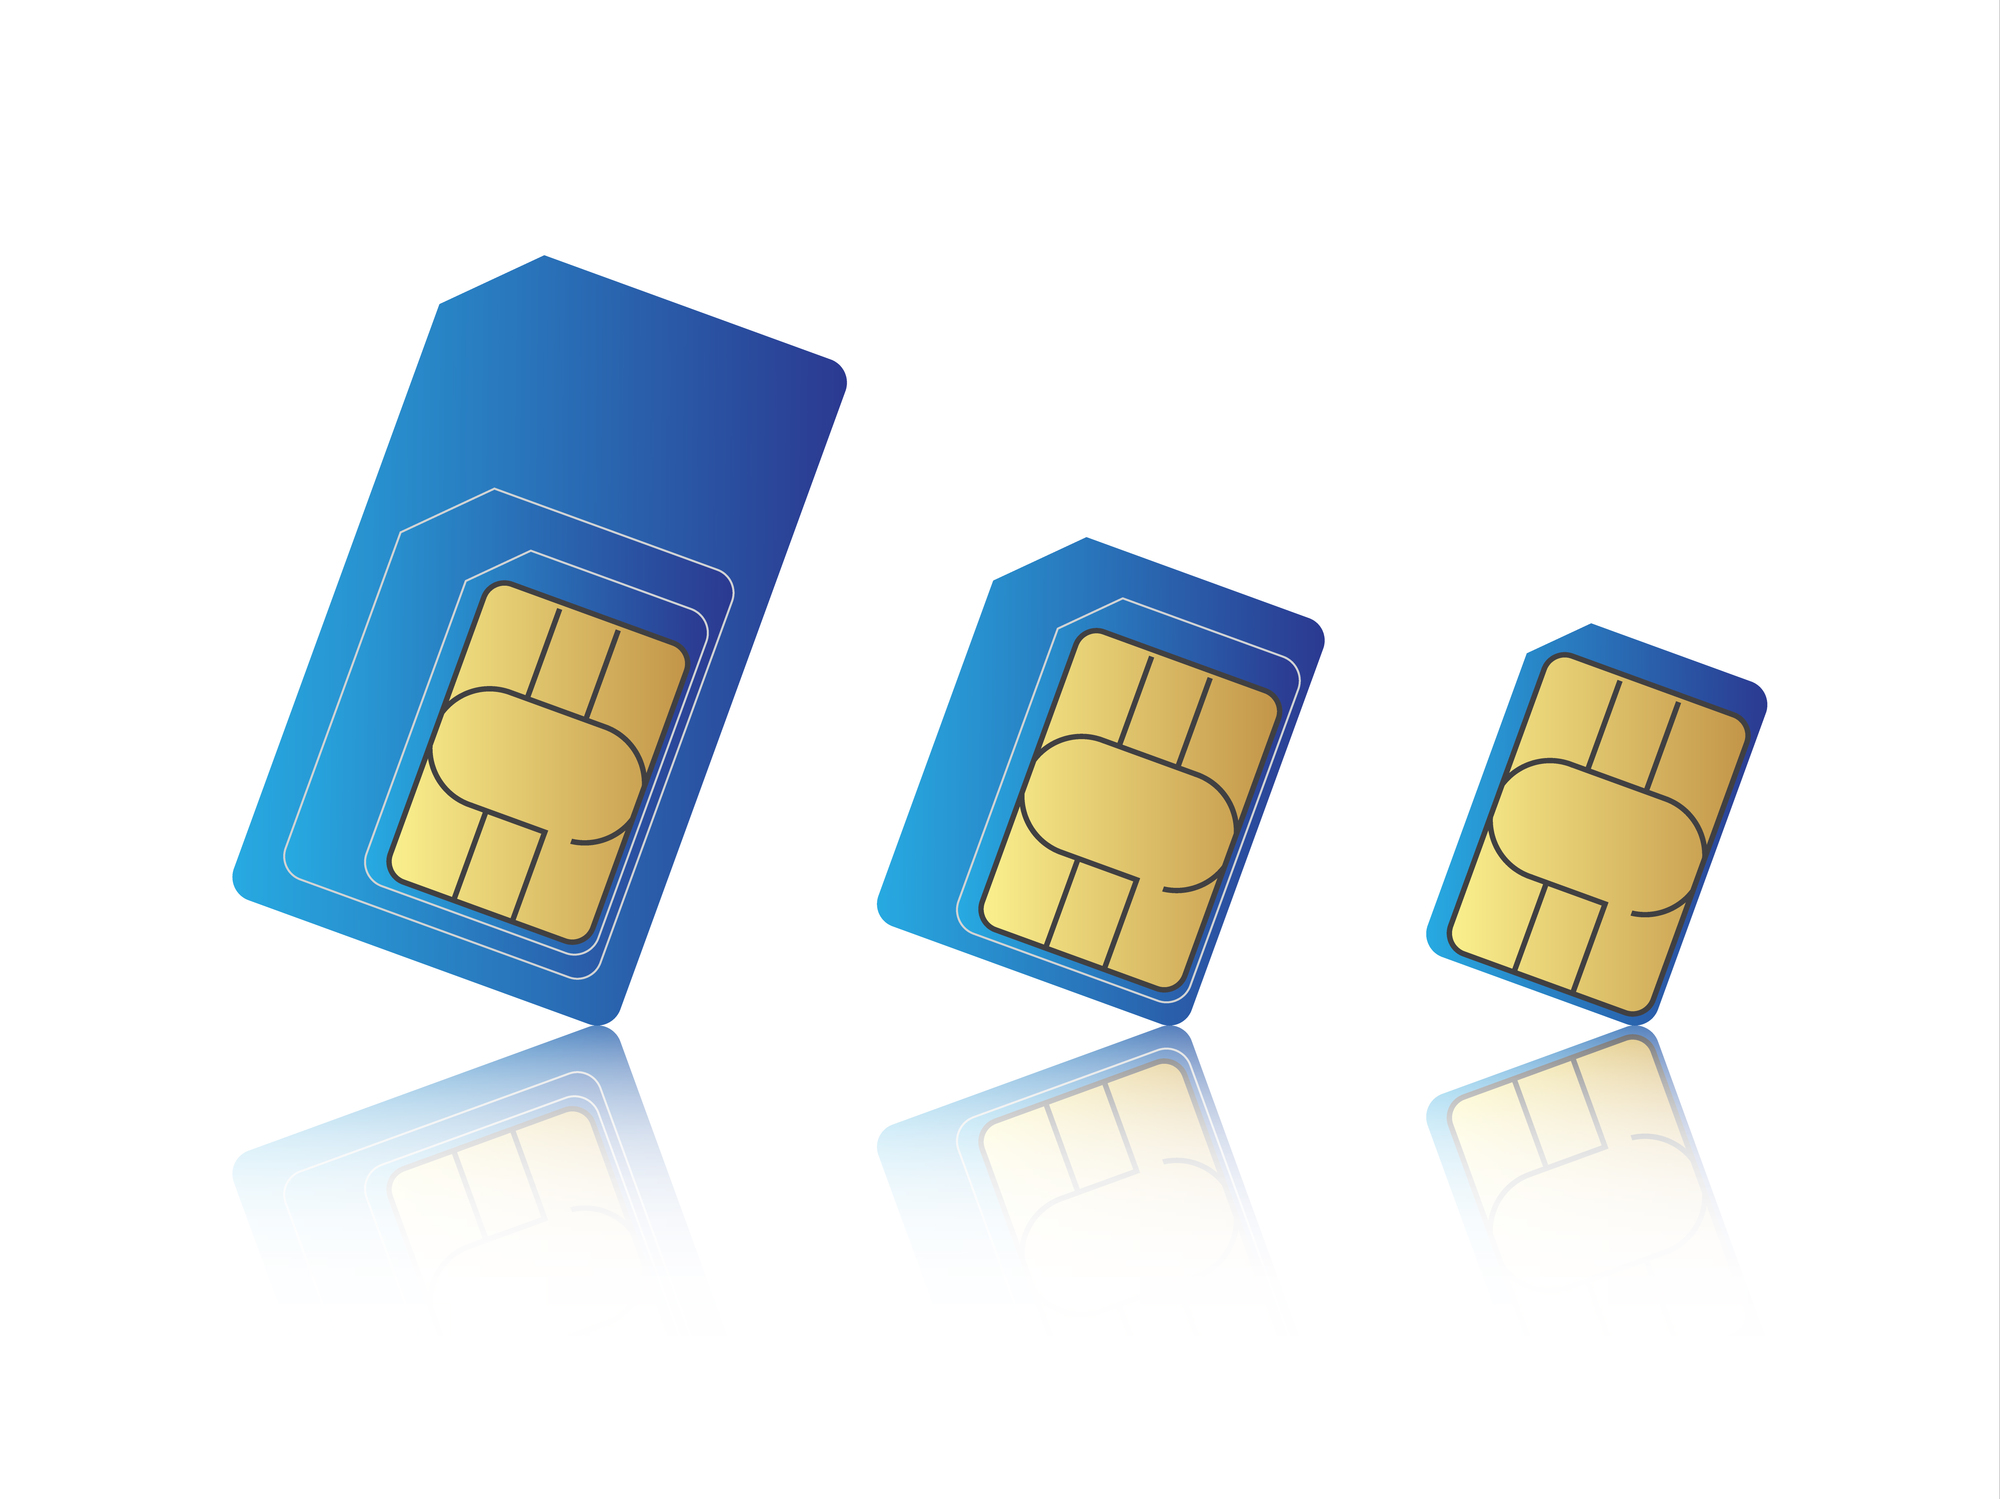 Mobile phone sim card set, standard, micro and nano sim card, vector illustration